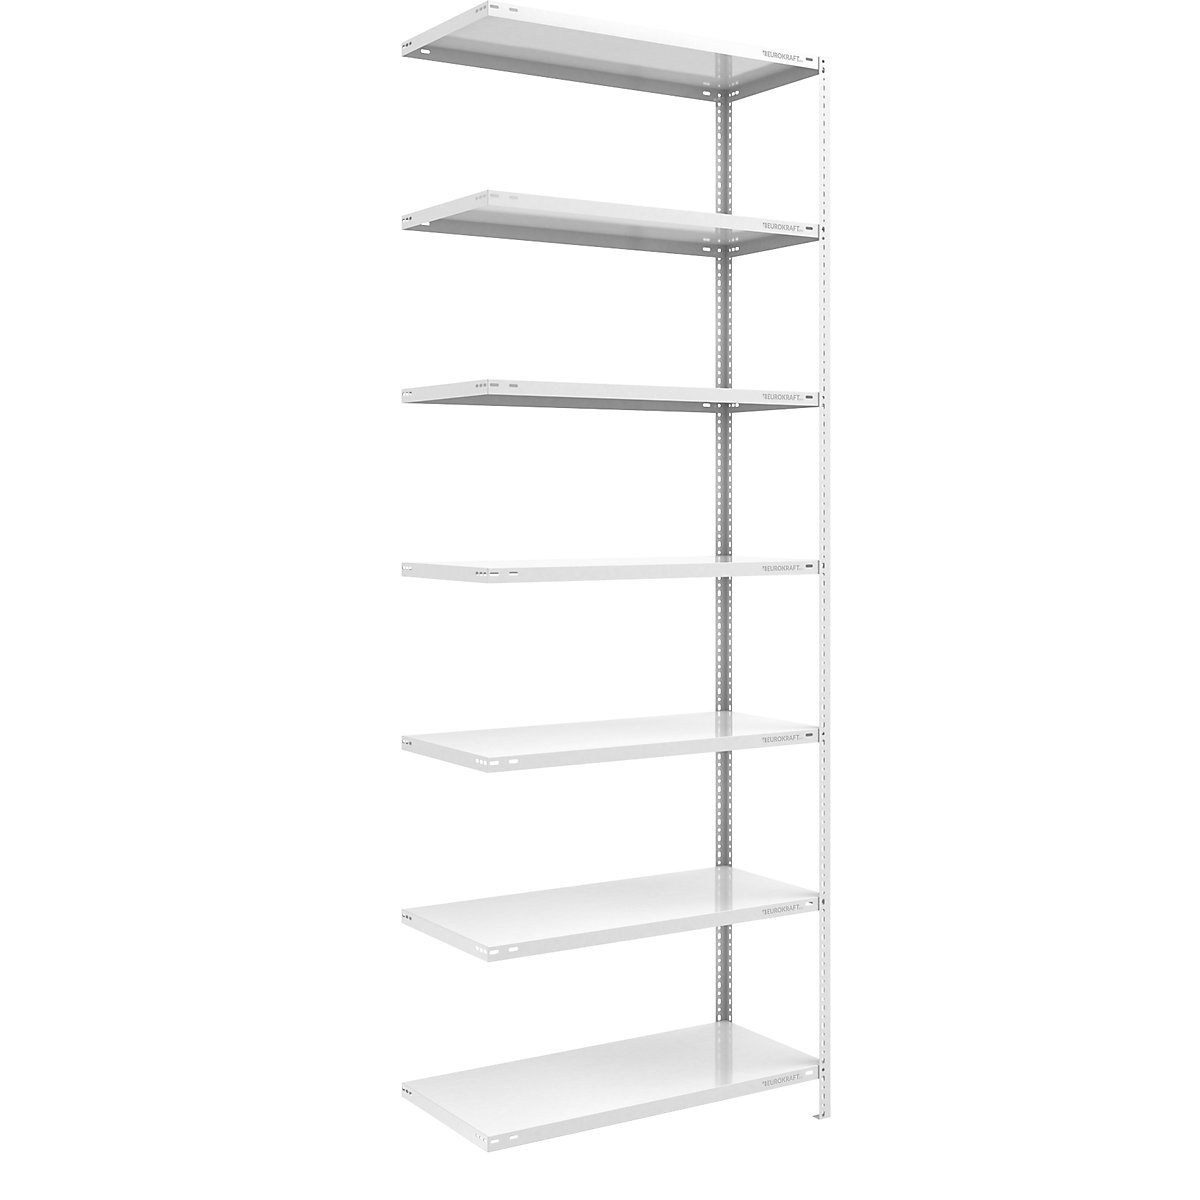 Bolt-together shelf unit, light duty, plastic coated – eurokraft pro, shelf unit height 3000 mm, shelf width 1000 mm, depth 600 mm, extension shelf unit-5